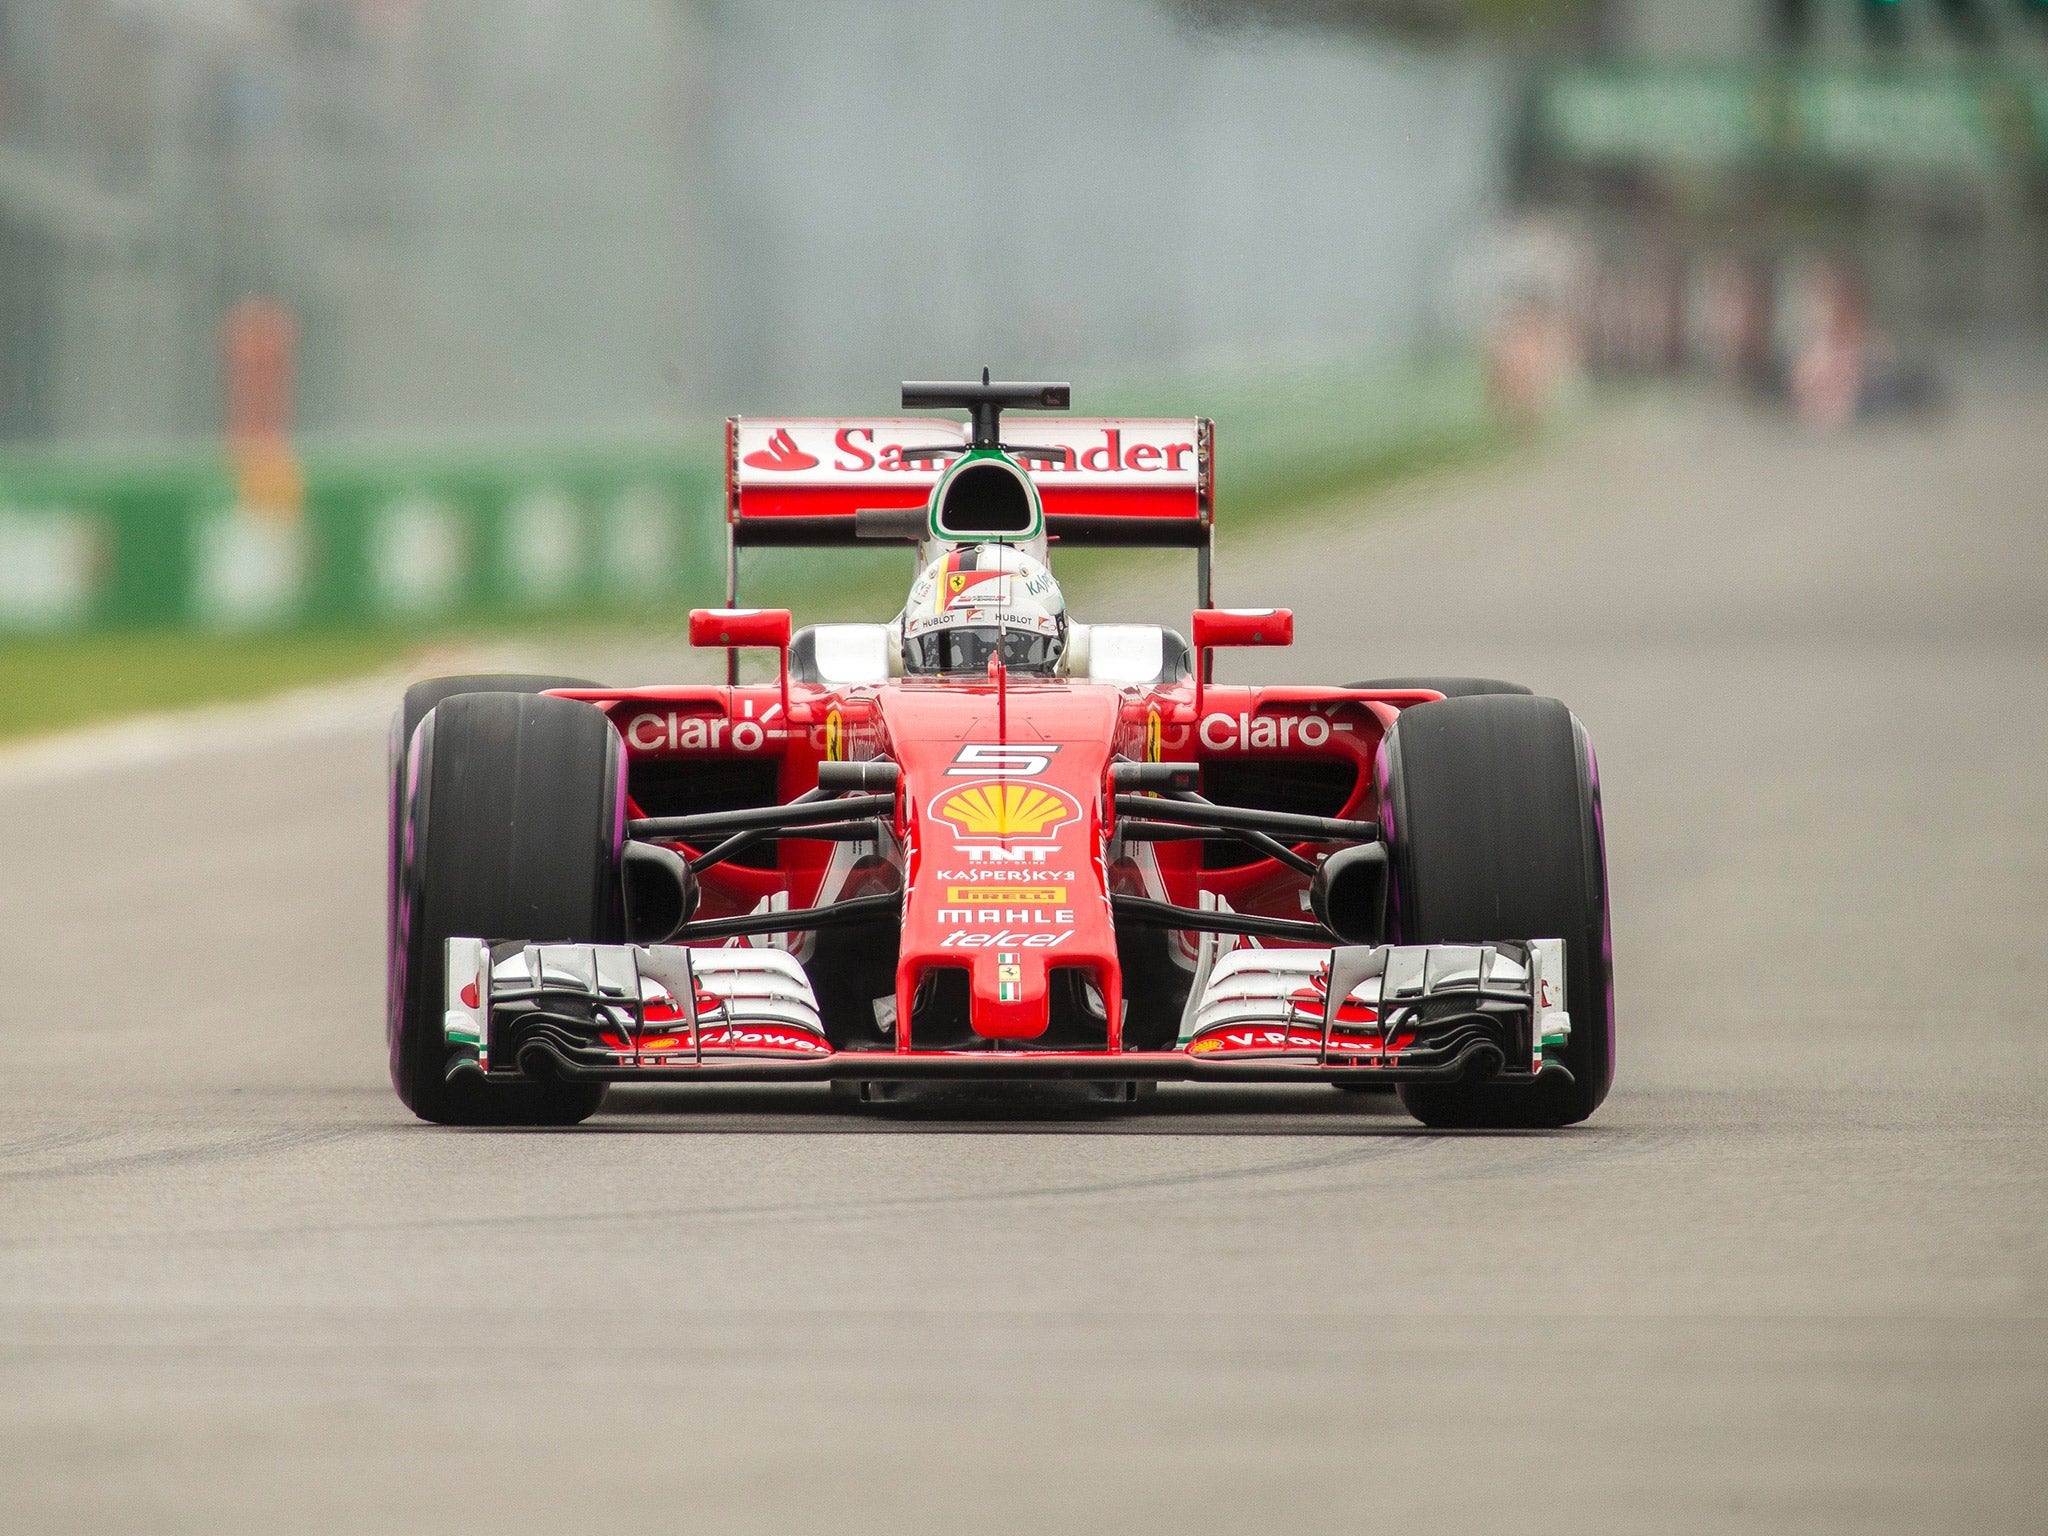 Sebastian Vettel starts third after putting in an impressive lap